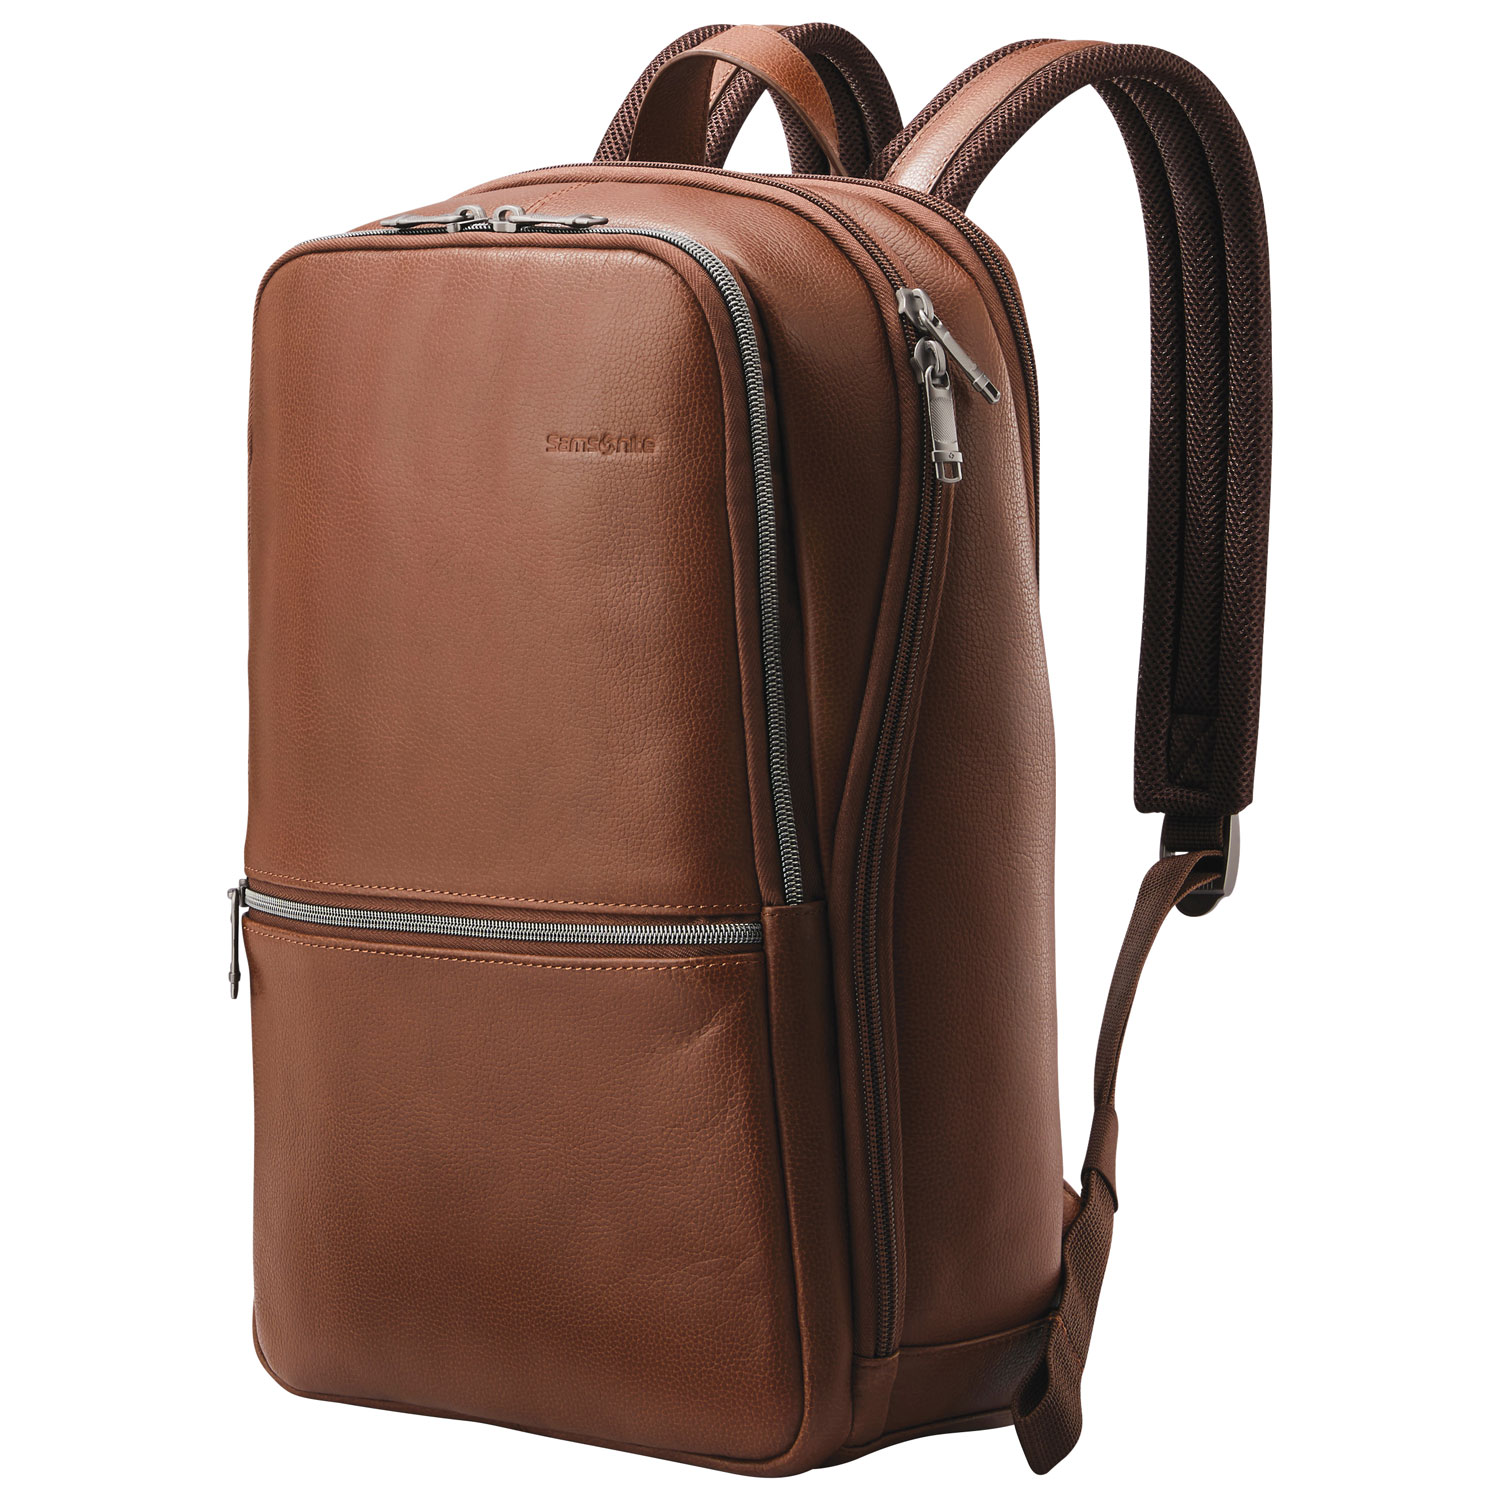 Samsonite Classic Leather 14.1" Laptop Commuter Backpack - Cognac